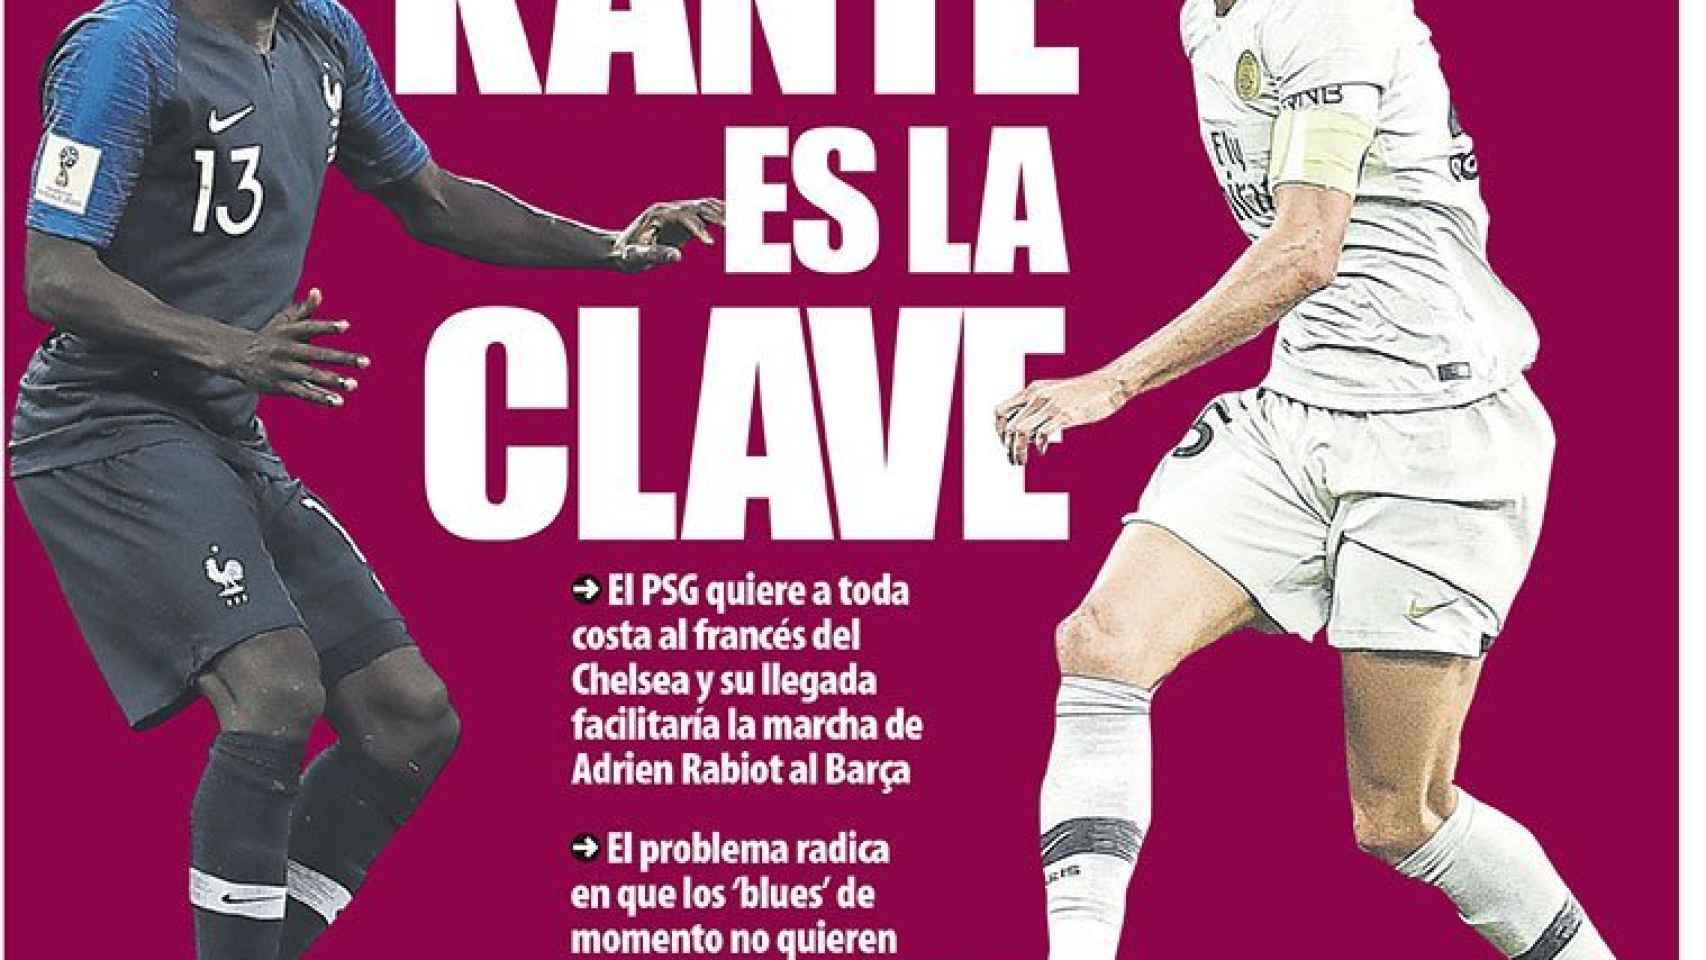 La portada del diario Mundo Deportivo (01/08/2018)1706 x 960